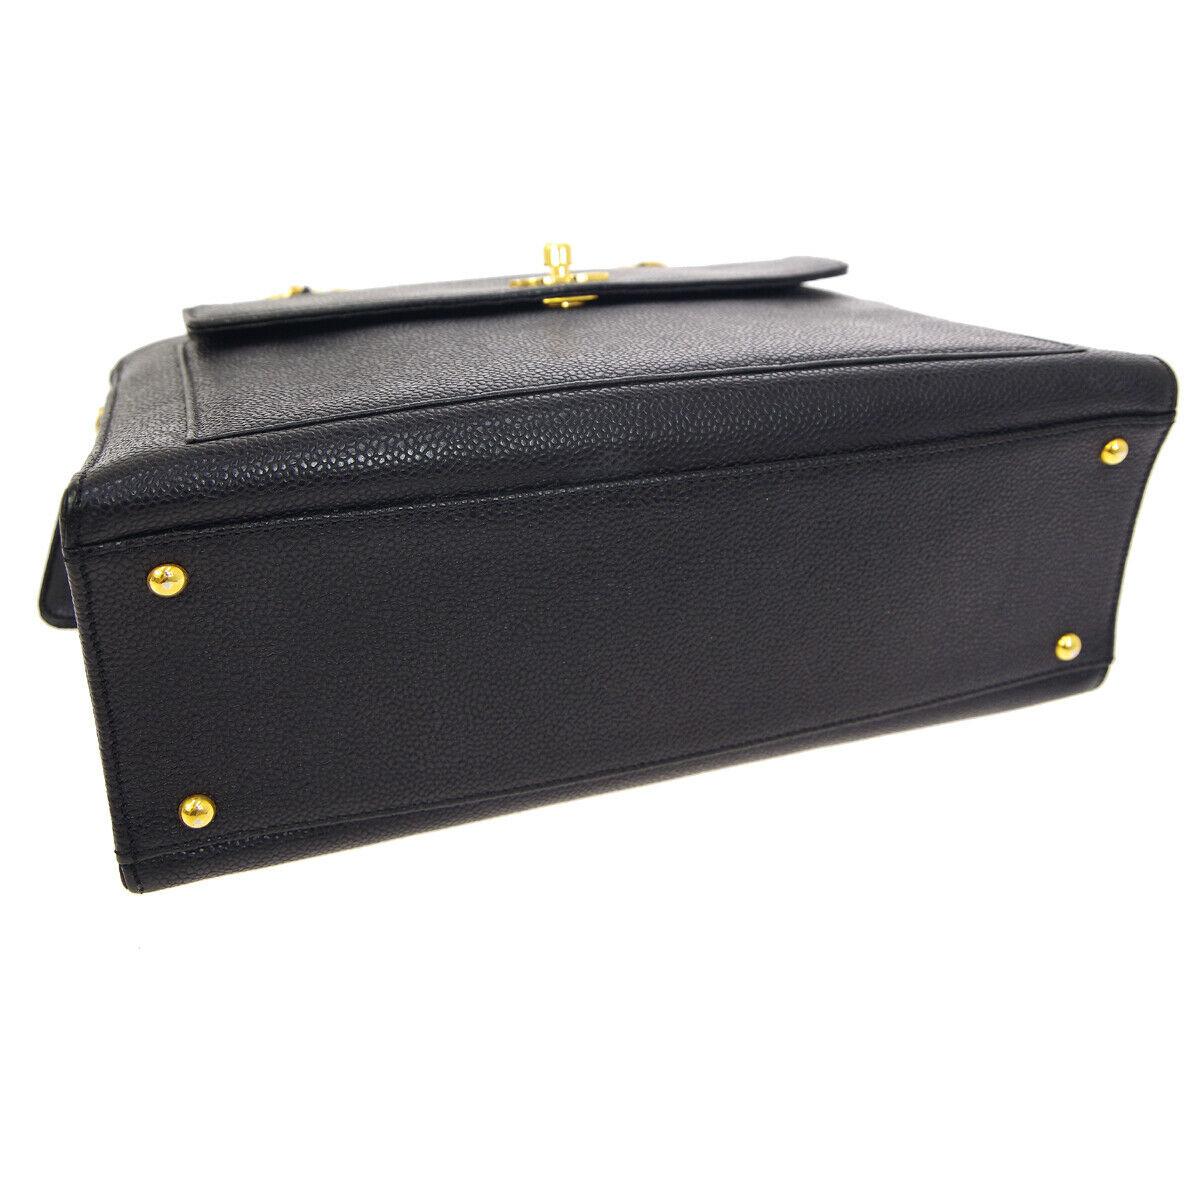 Chanel Black Leather Gold Chain Medium Carryall Shopper Tote Shoulder Bag 1